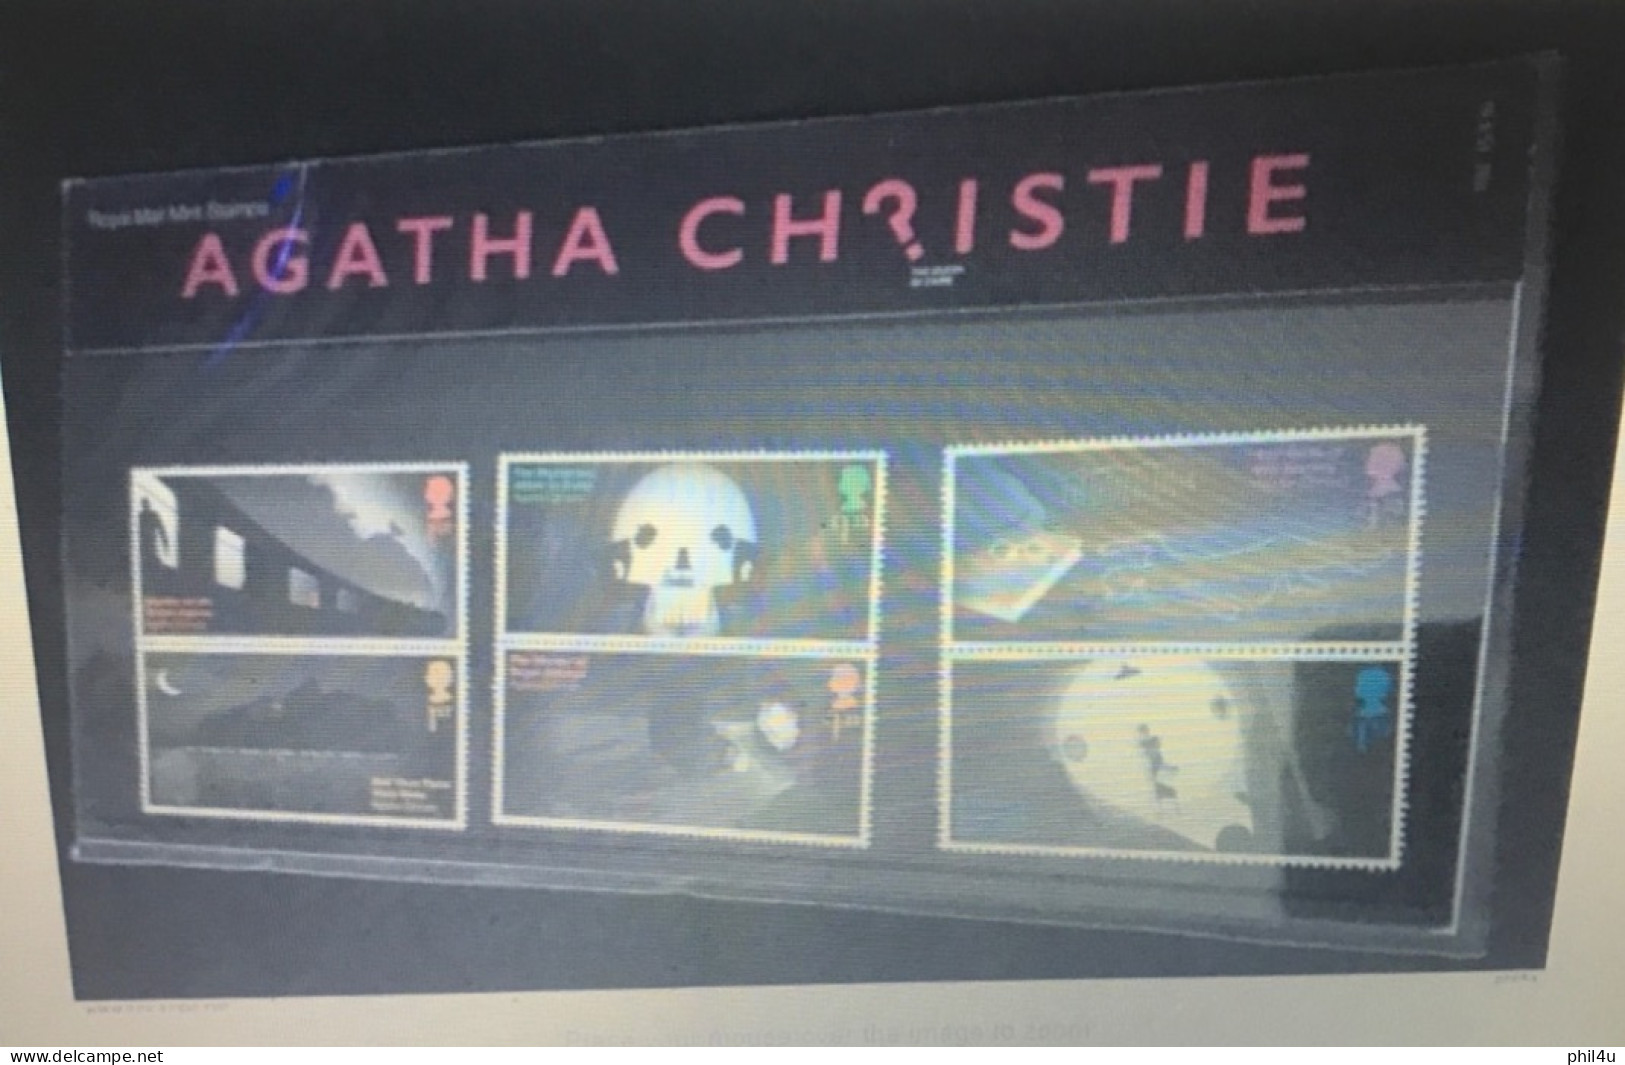 2016 GB Agatha Christie Presentation Pack Popular - Presentation Packs